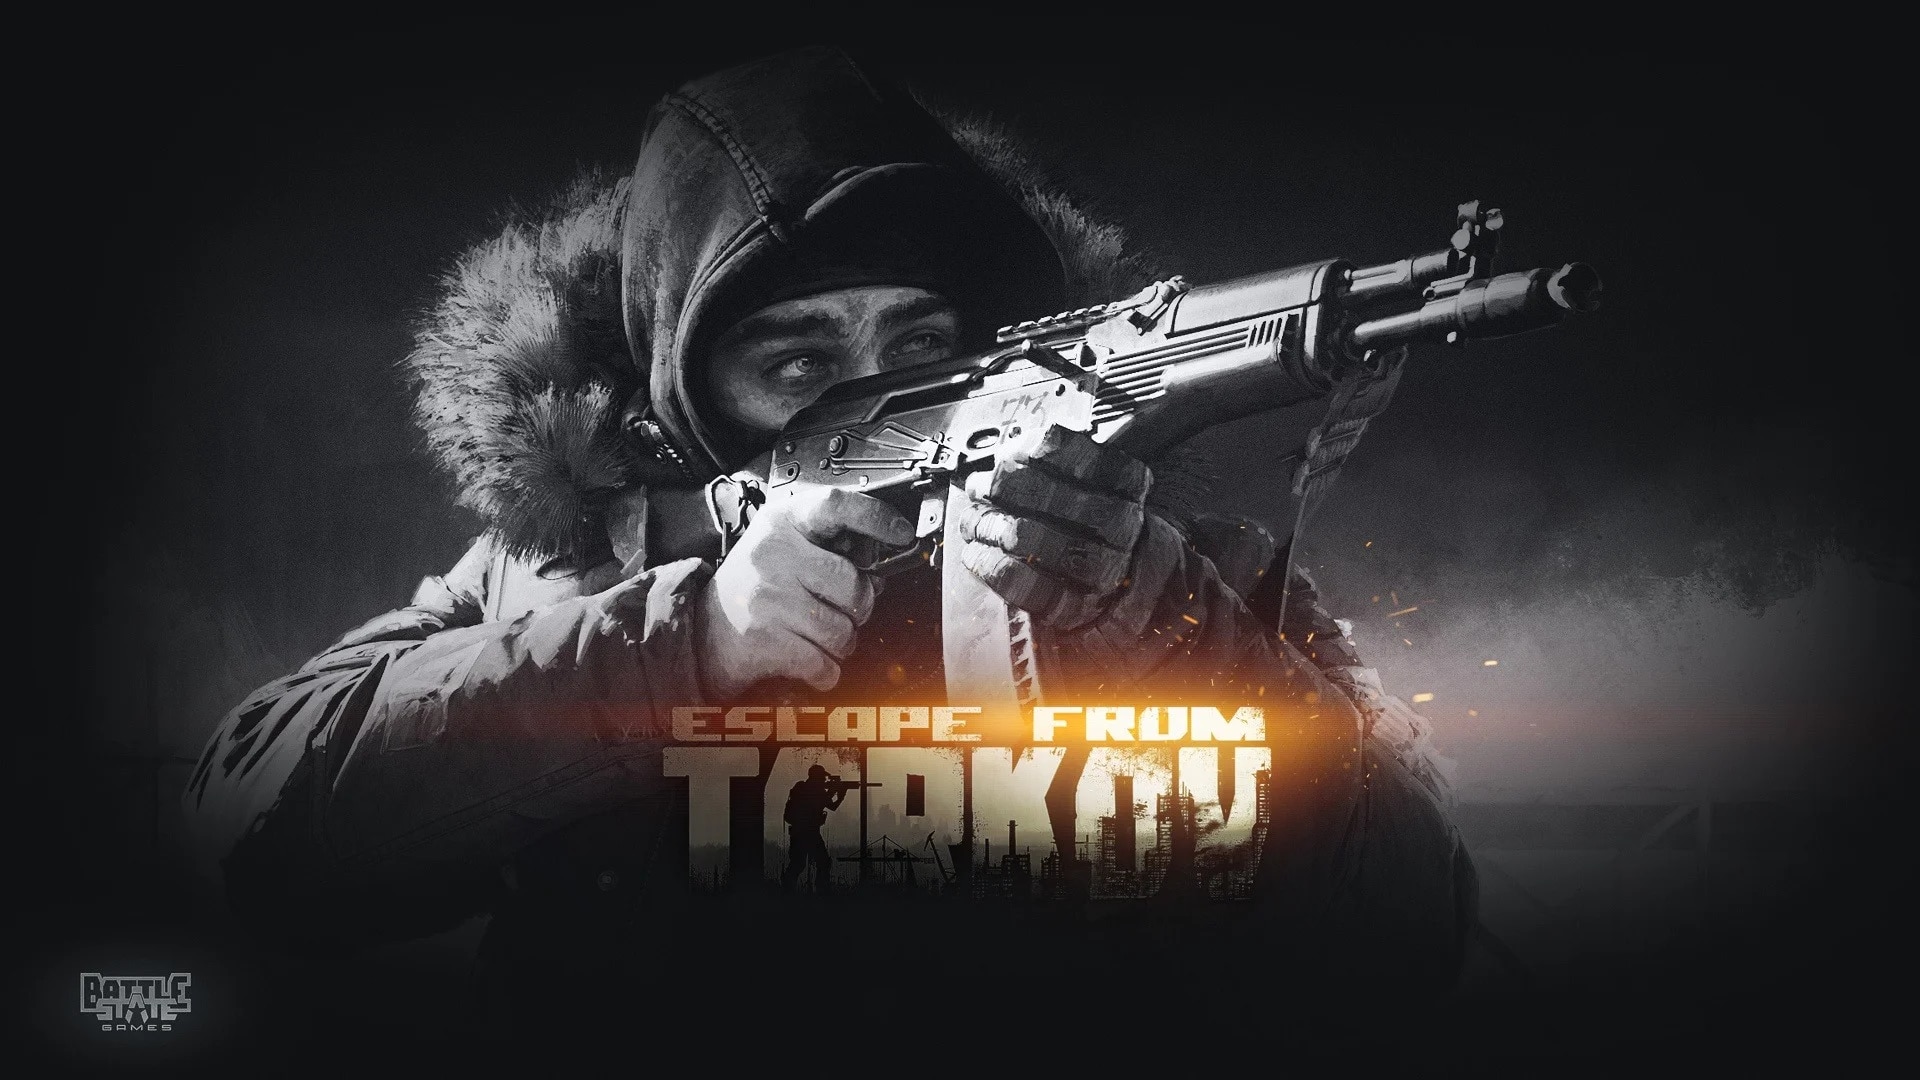 Taking Down The Rogue USECs - Escape From Tarkov 